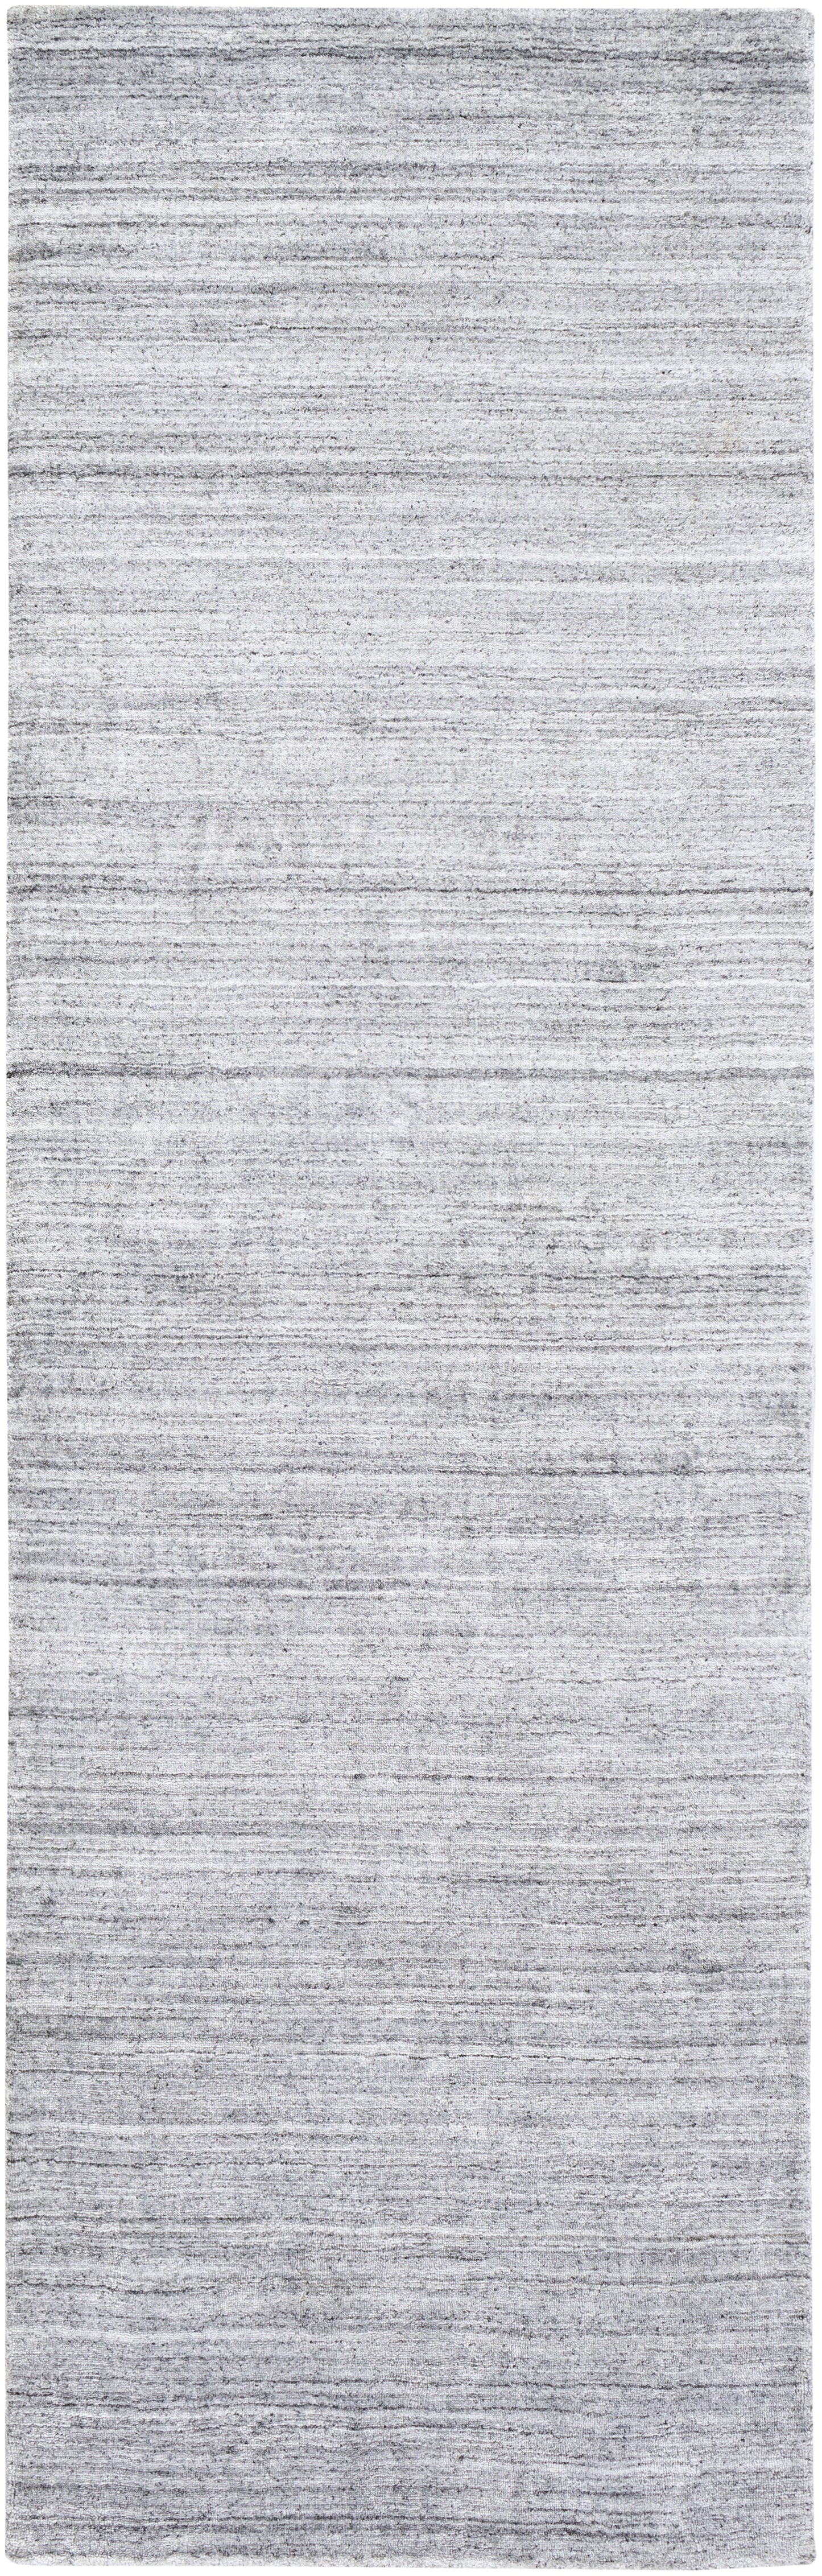 Torino 23309 Hand Woven Wool Indoor Area Rug by Surya Rugs